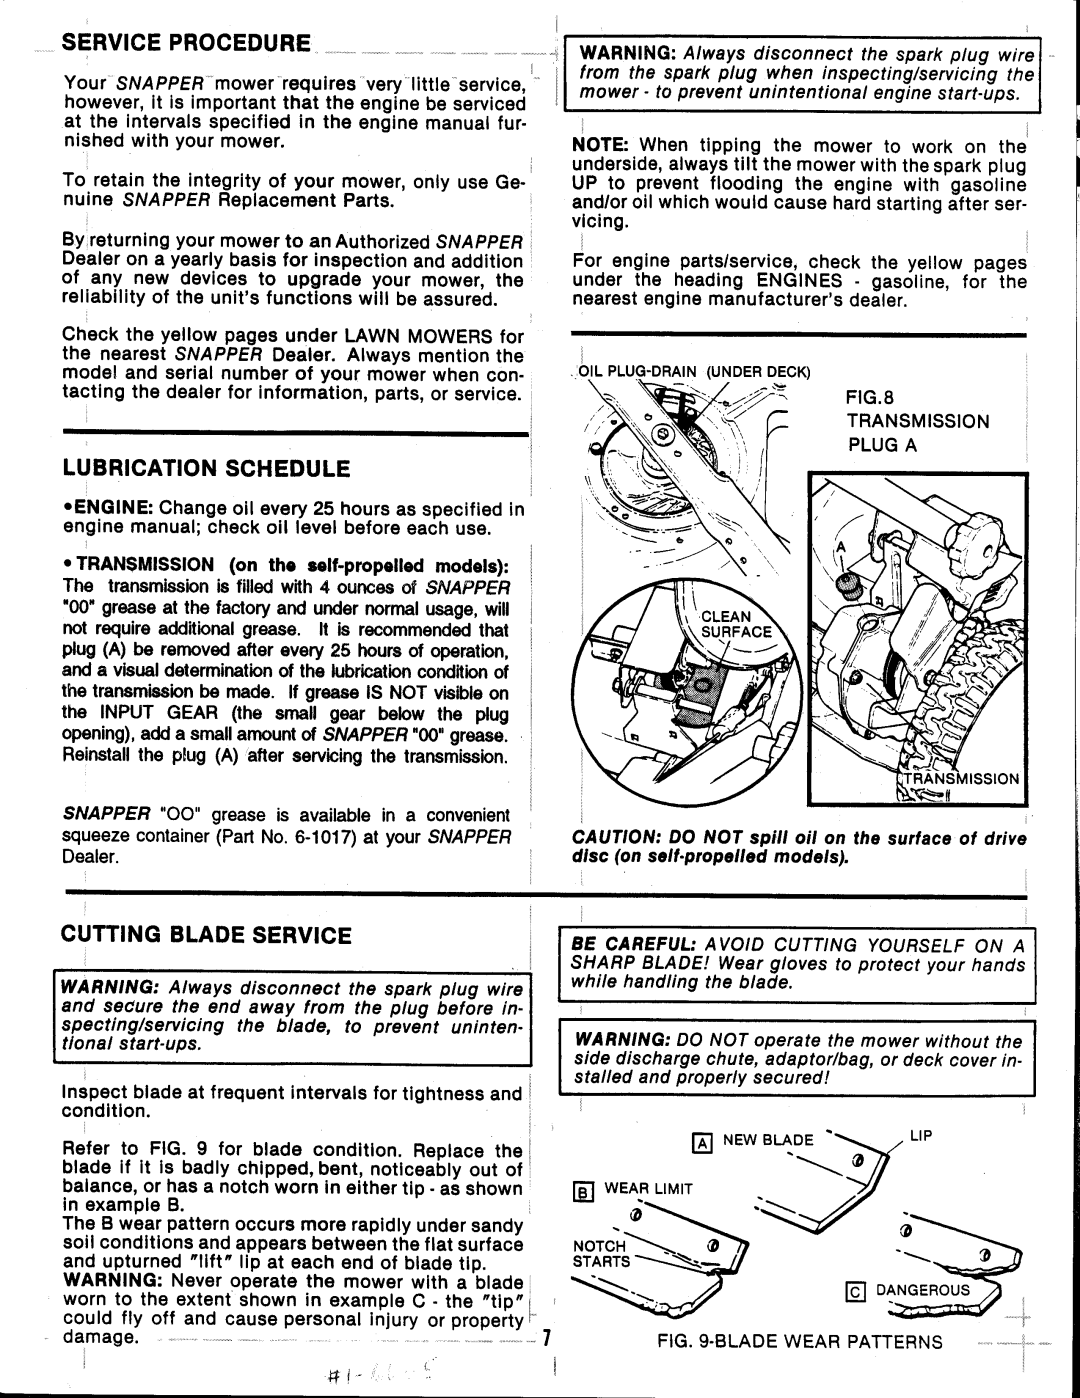 Snapper Series 7 manual 